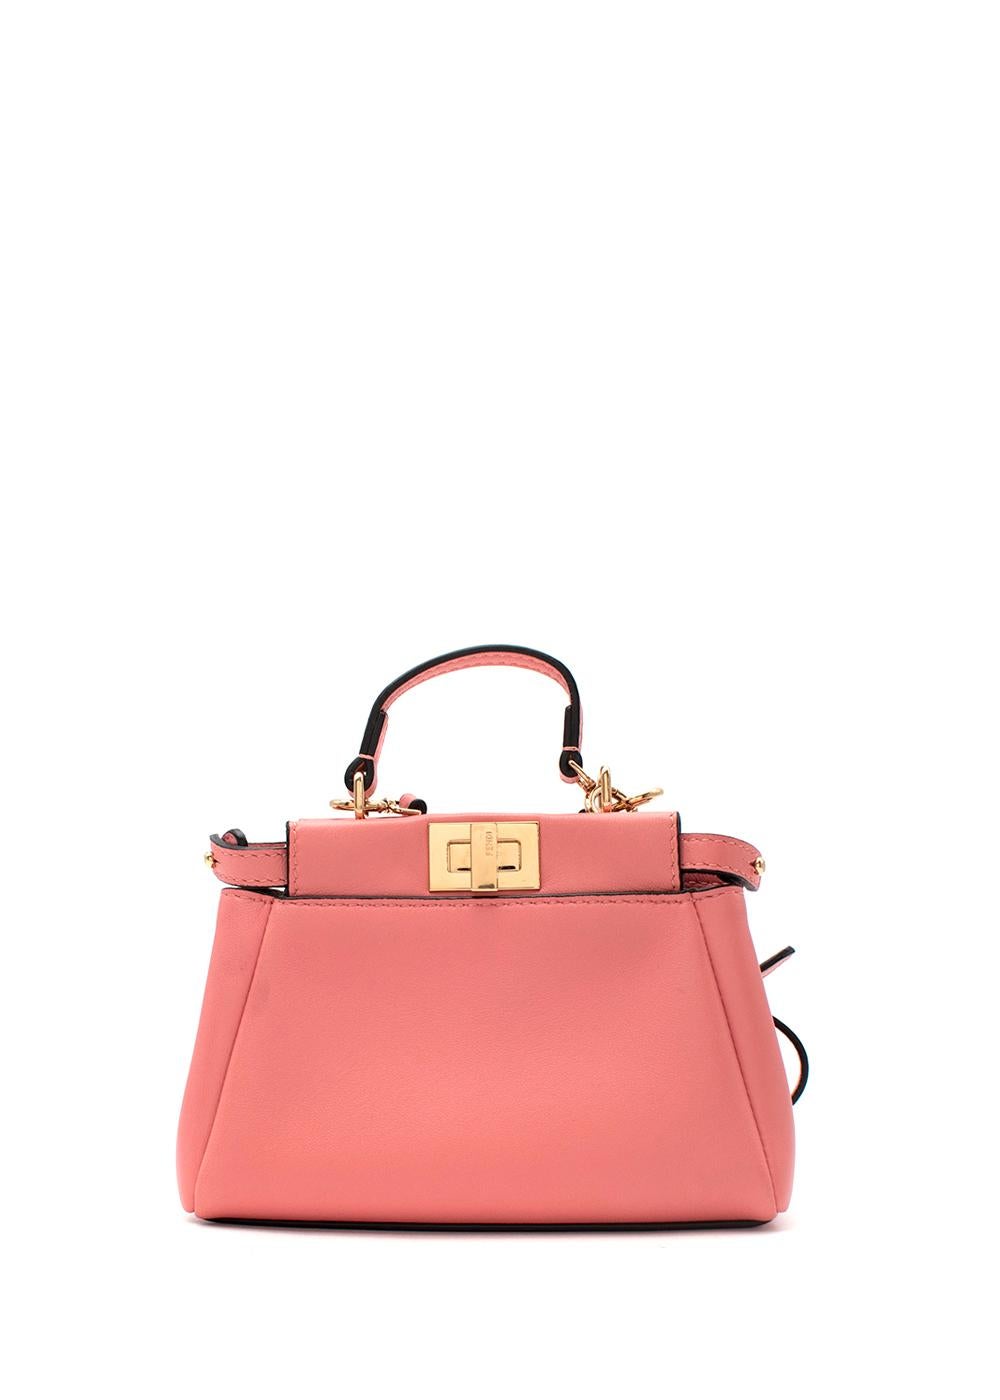 coral pink handbags